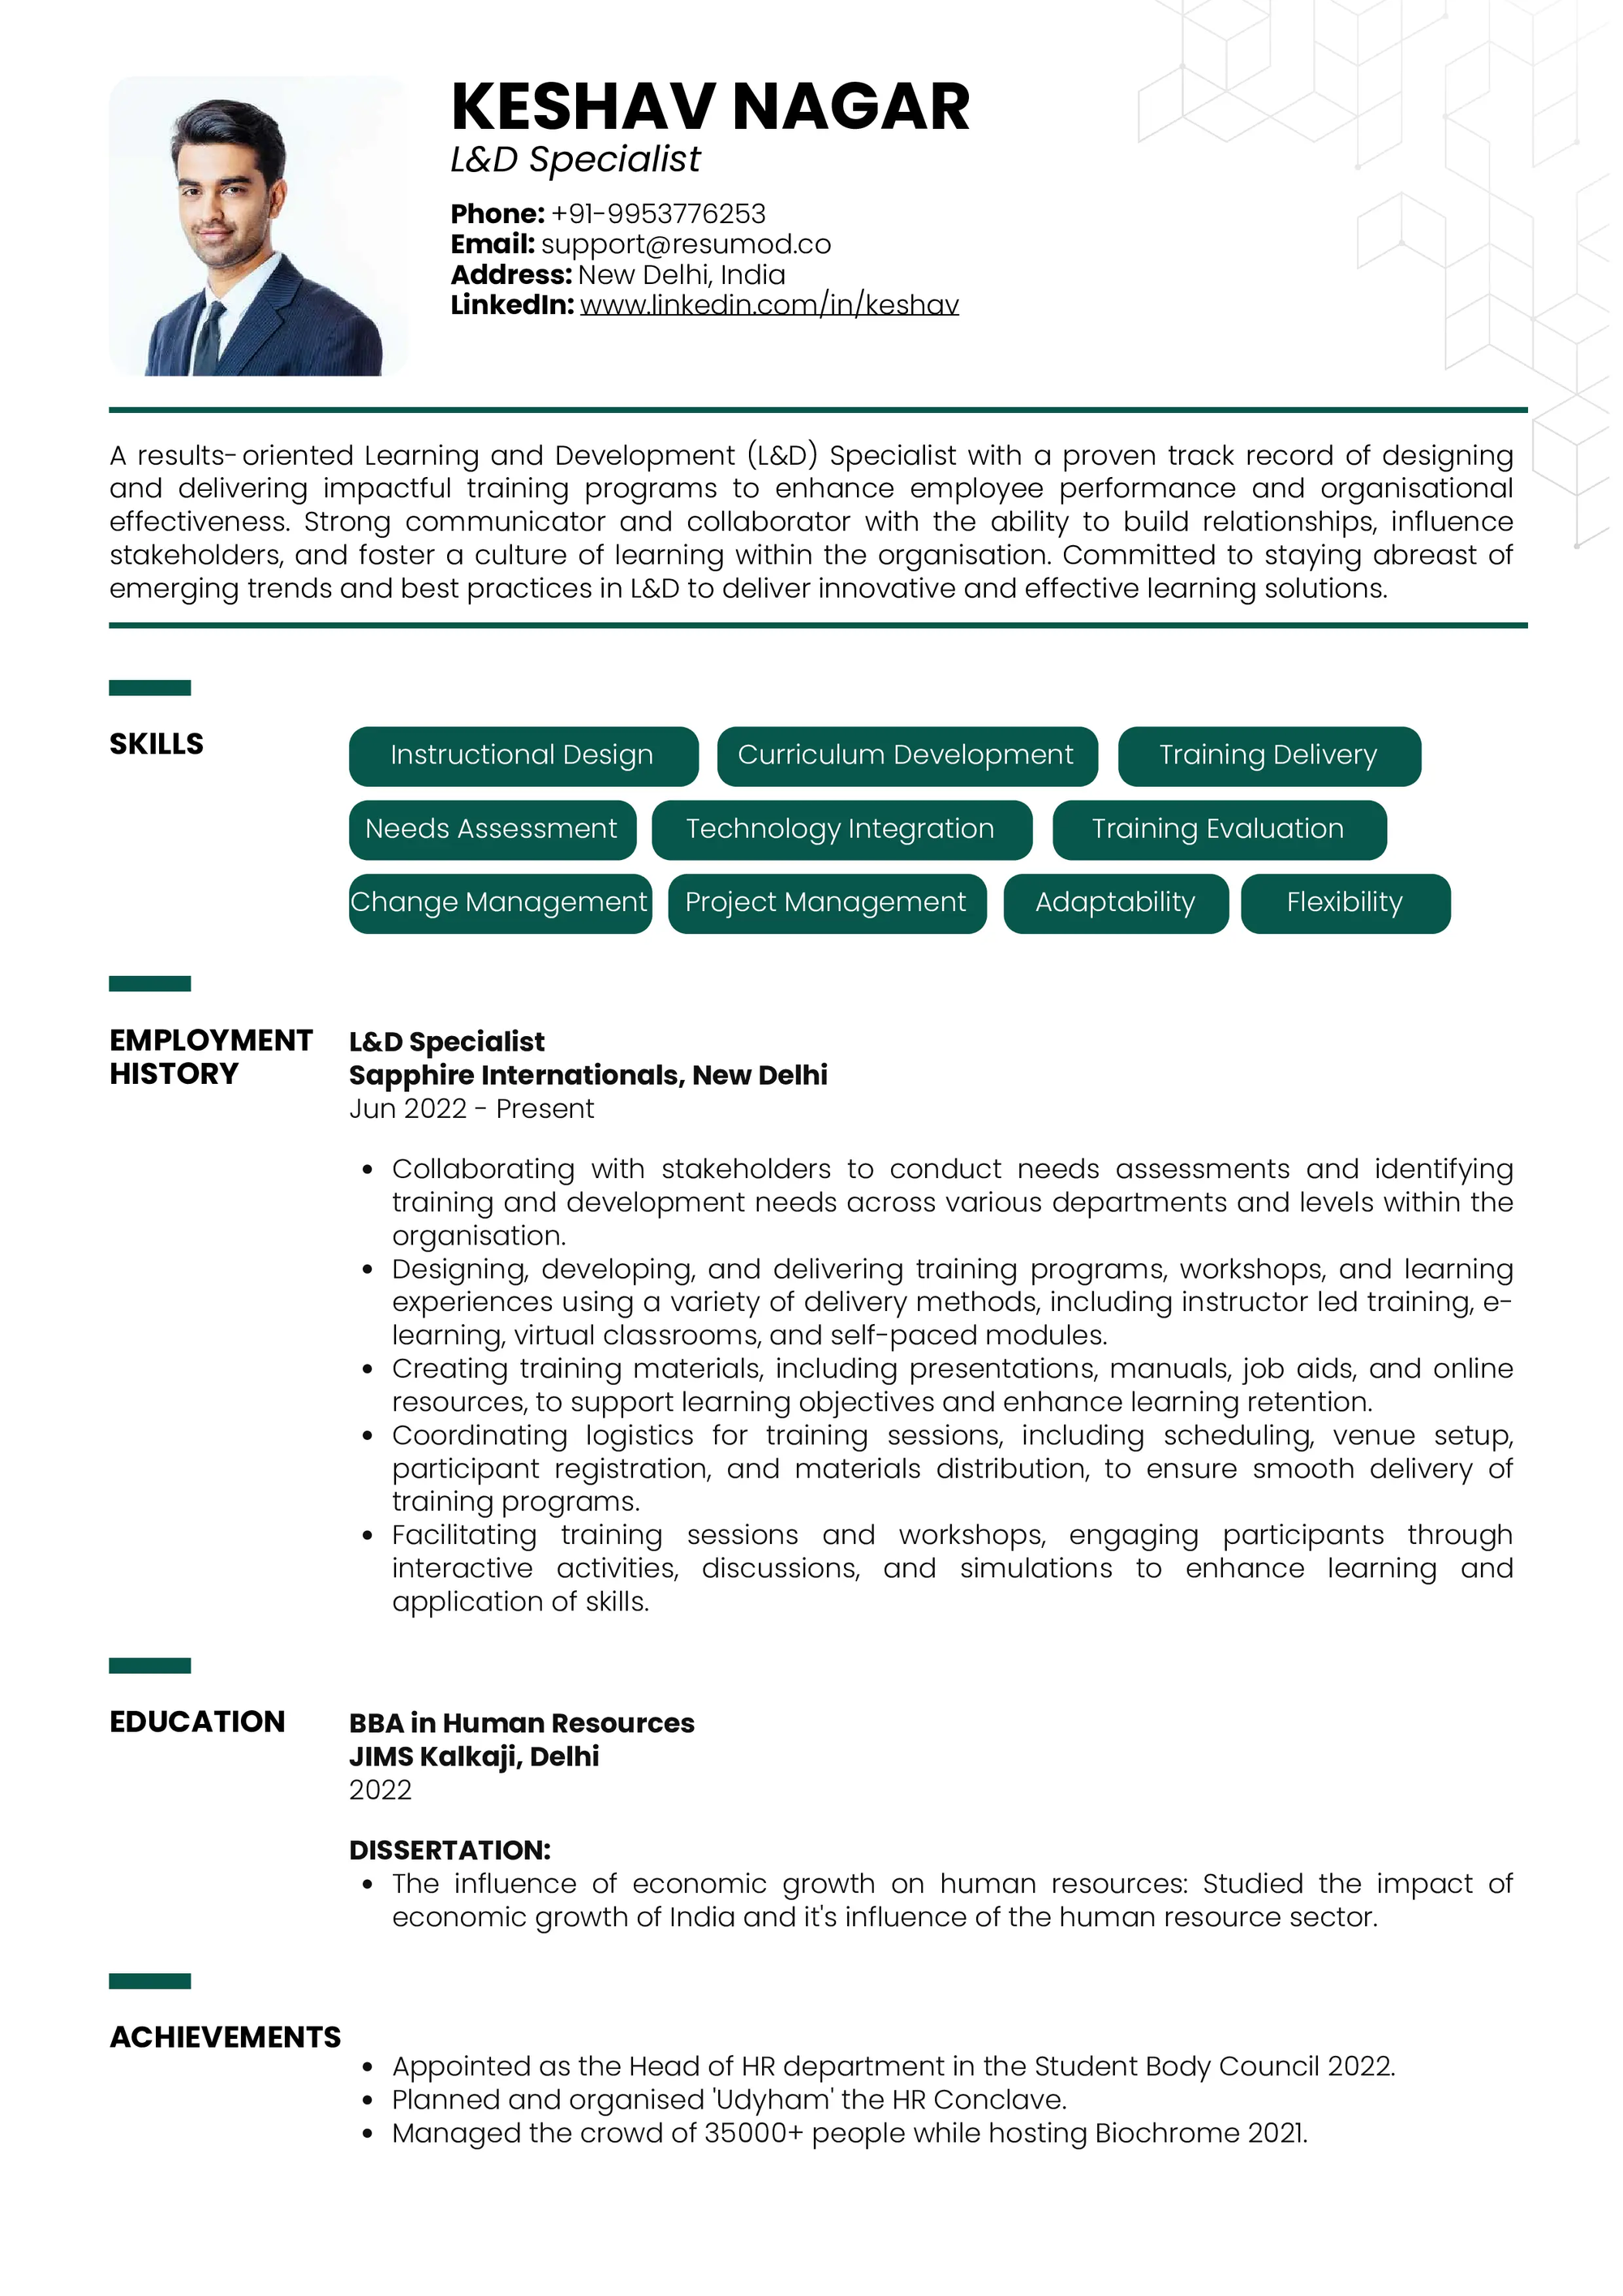 Resume of L&D Specialist built on Resumod